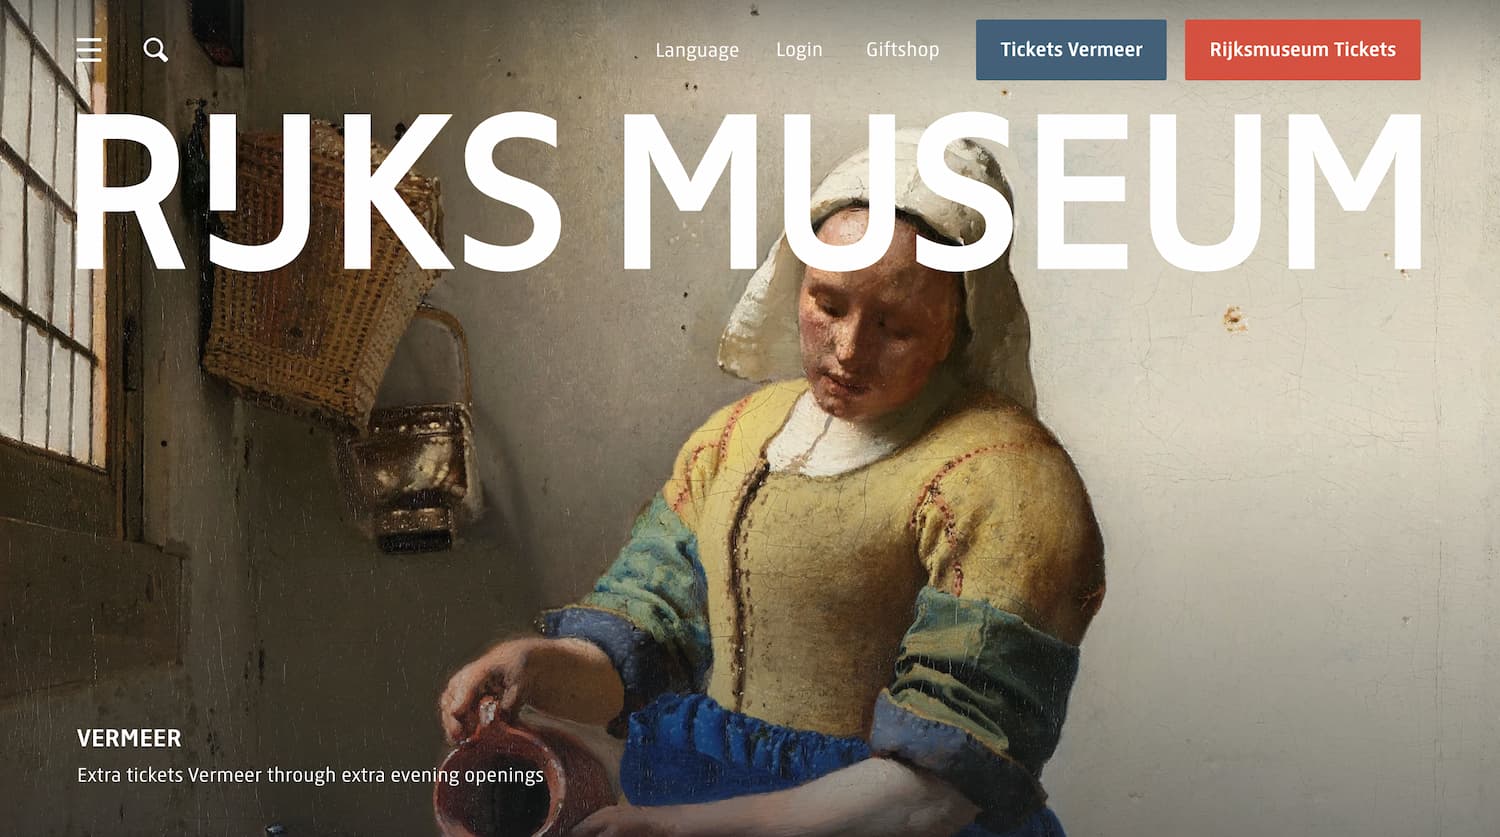 homepage for the museum website rijksmuseum amsterdam